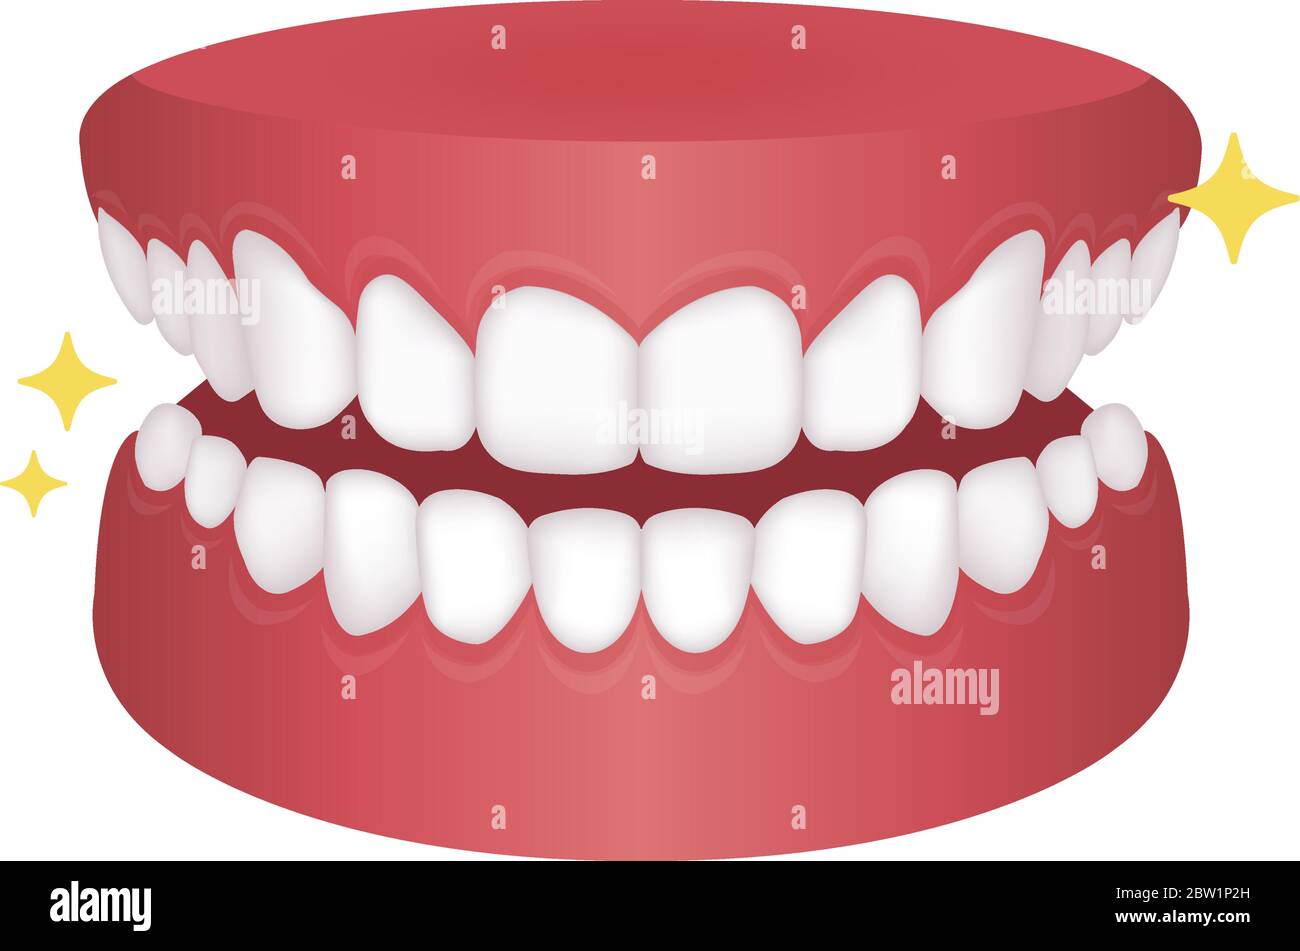 Dental braces flat vector illustration / no text Stock Vector